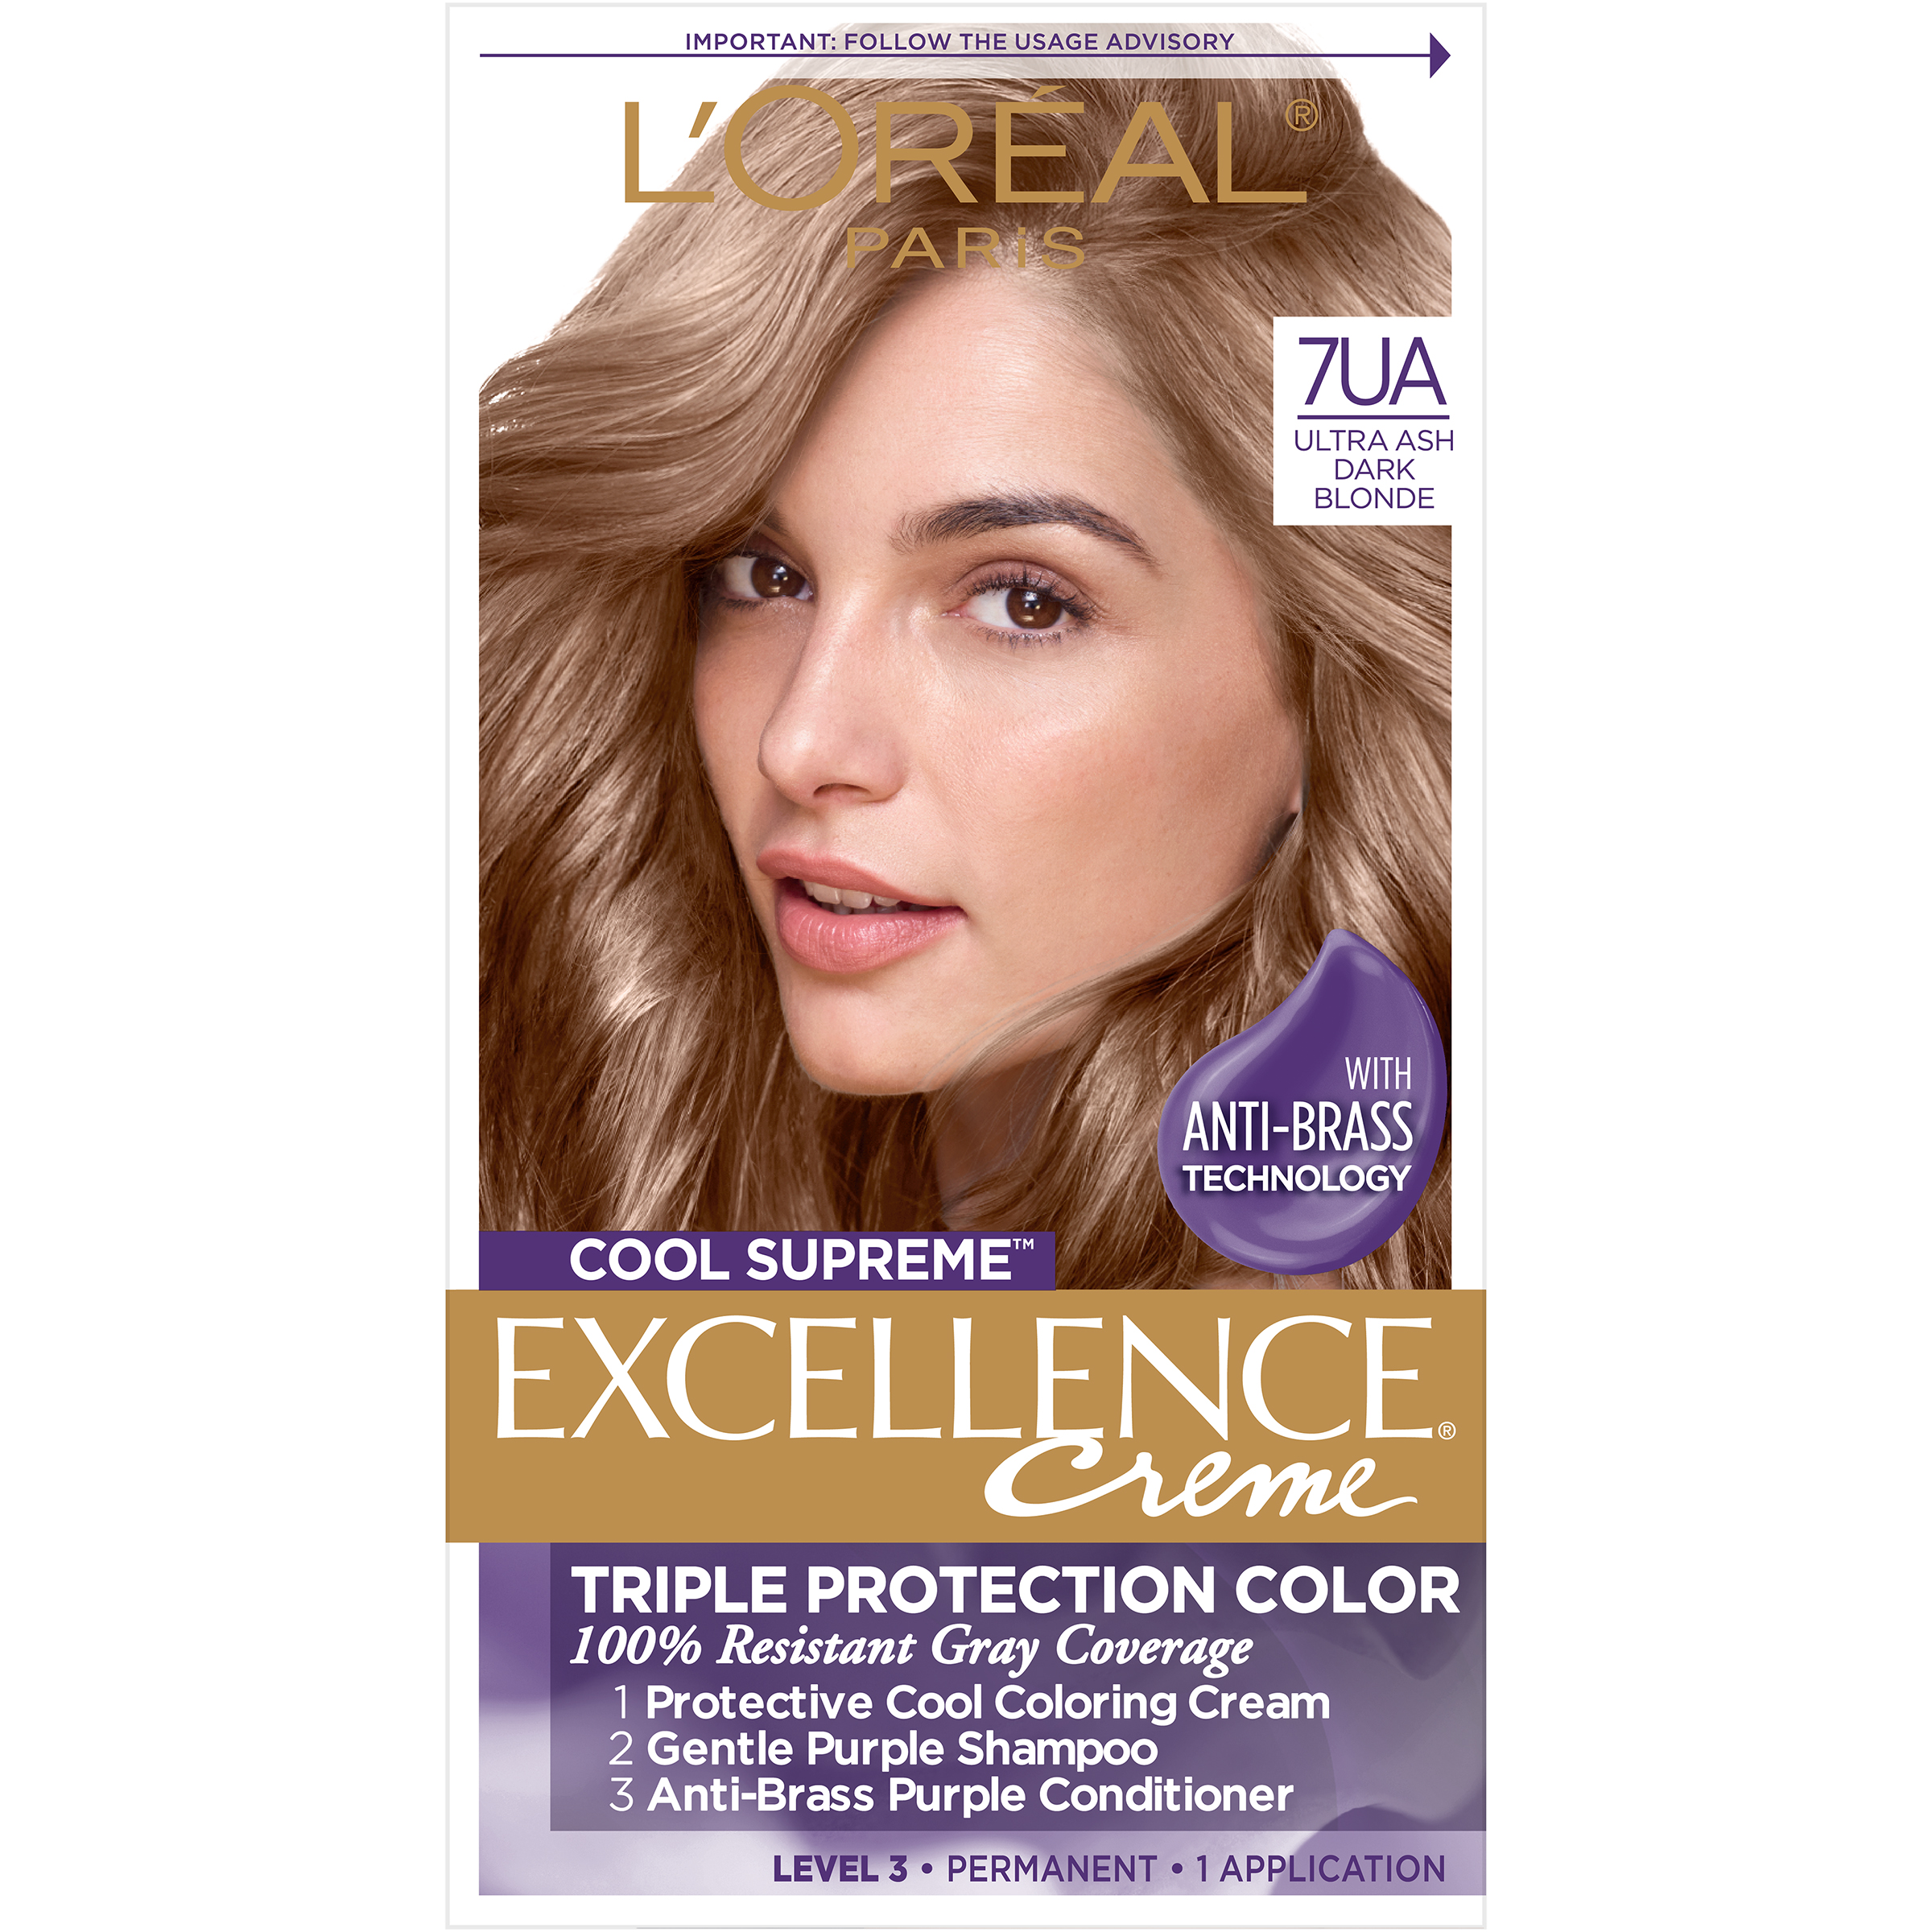 L'Oreal Paris Excellence Creme Permanent Hair Color, Ultra Ash Dark Blonde - image 1 of 9